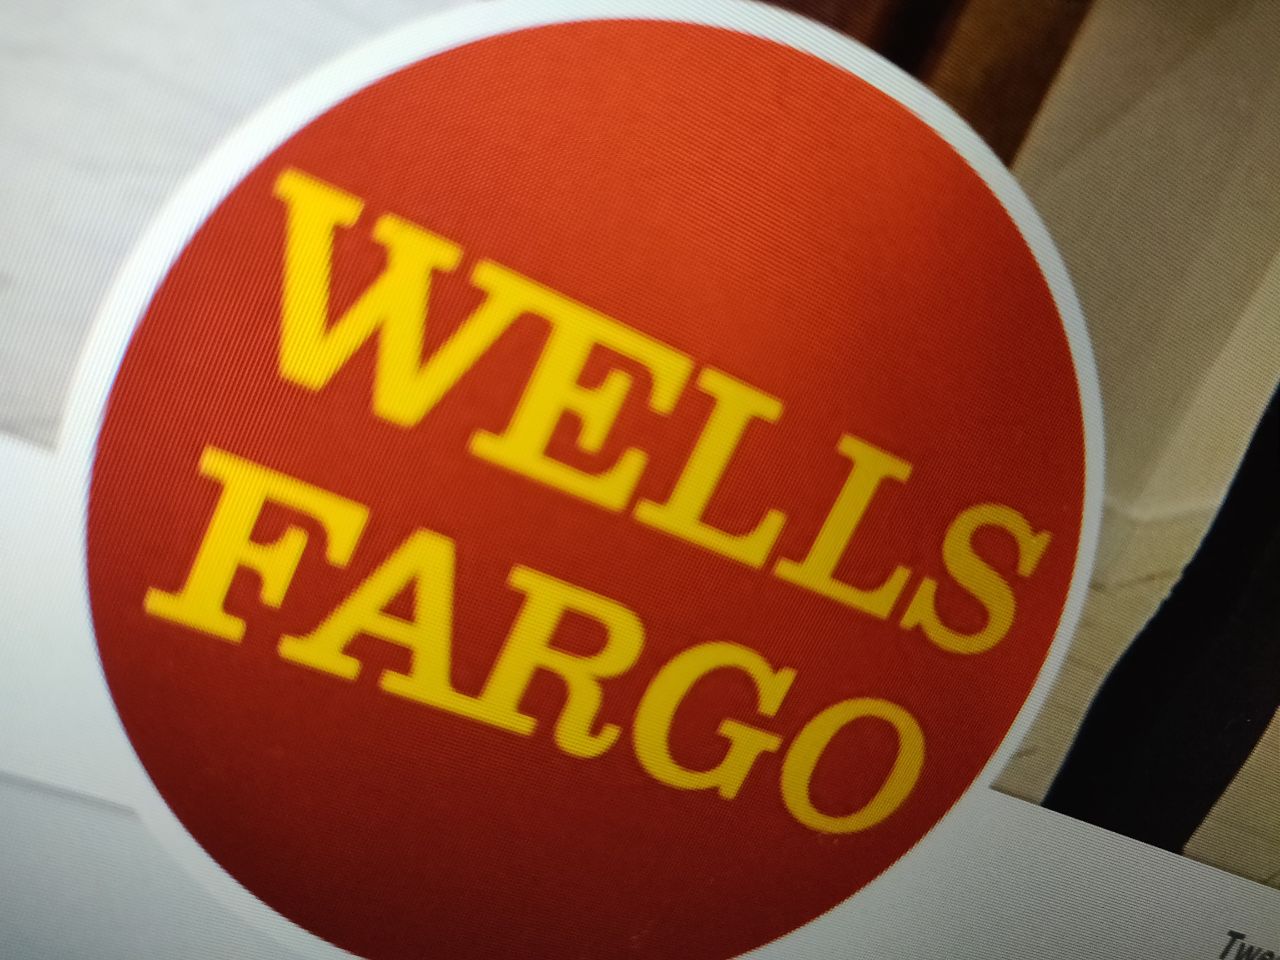 [Update: Oct. 12] Wells Fargo website app down and not working, online / mobile banking suffers - what happened?